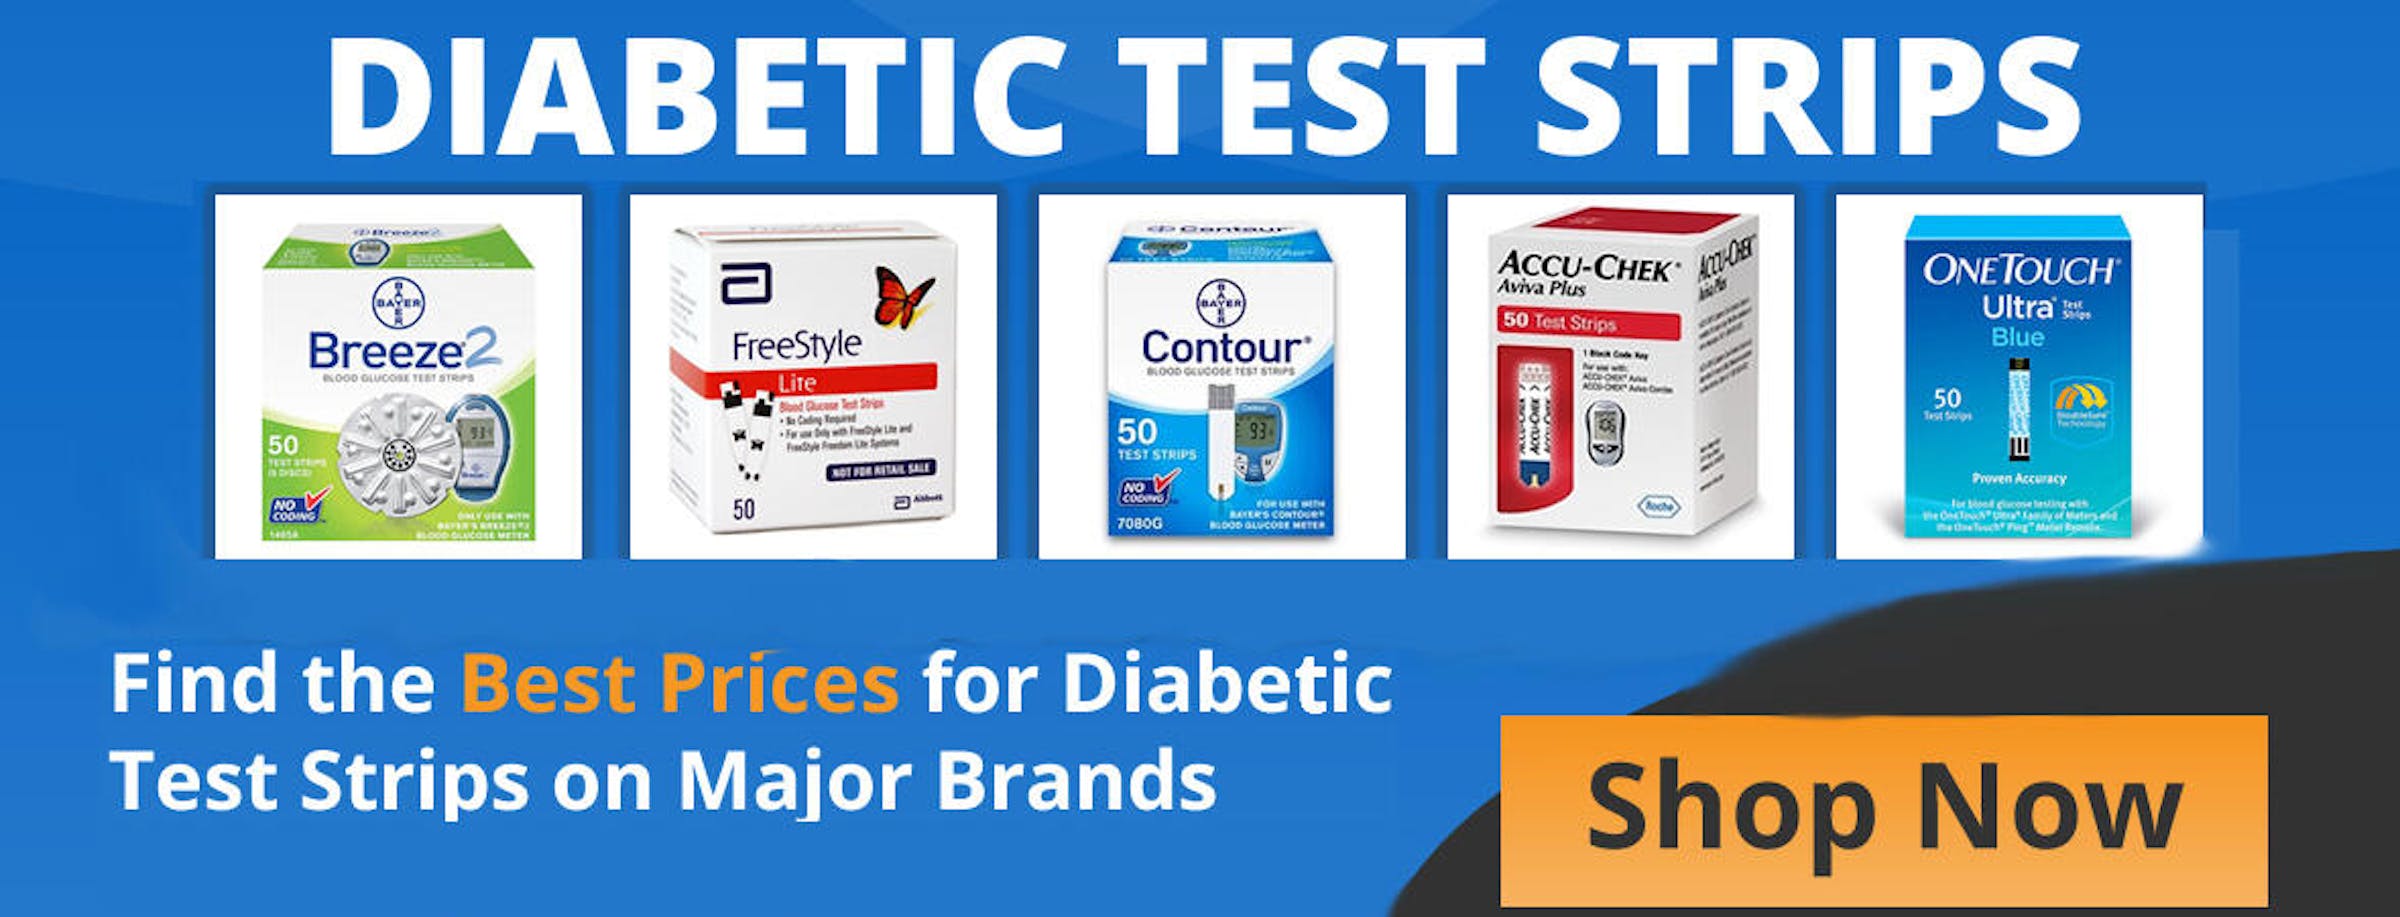 Diabetic Warehouse Supplies | Reviews on Judge.me